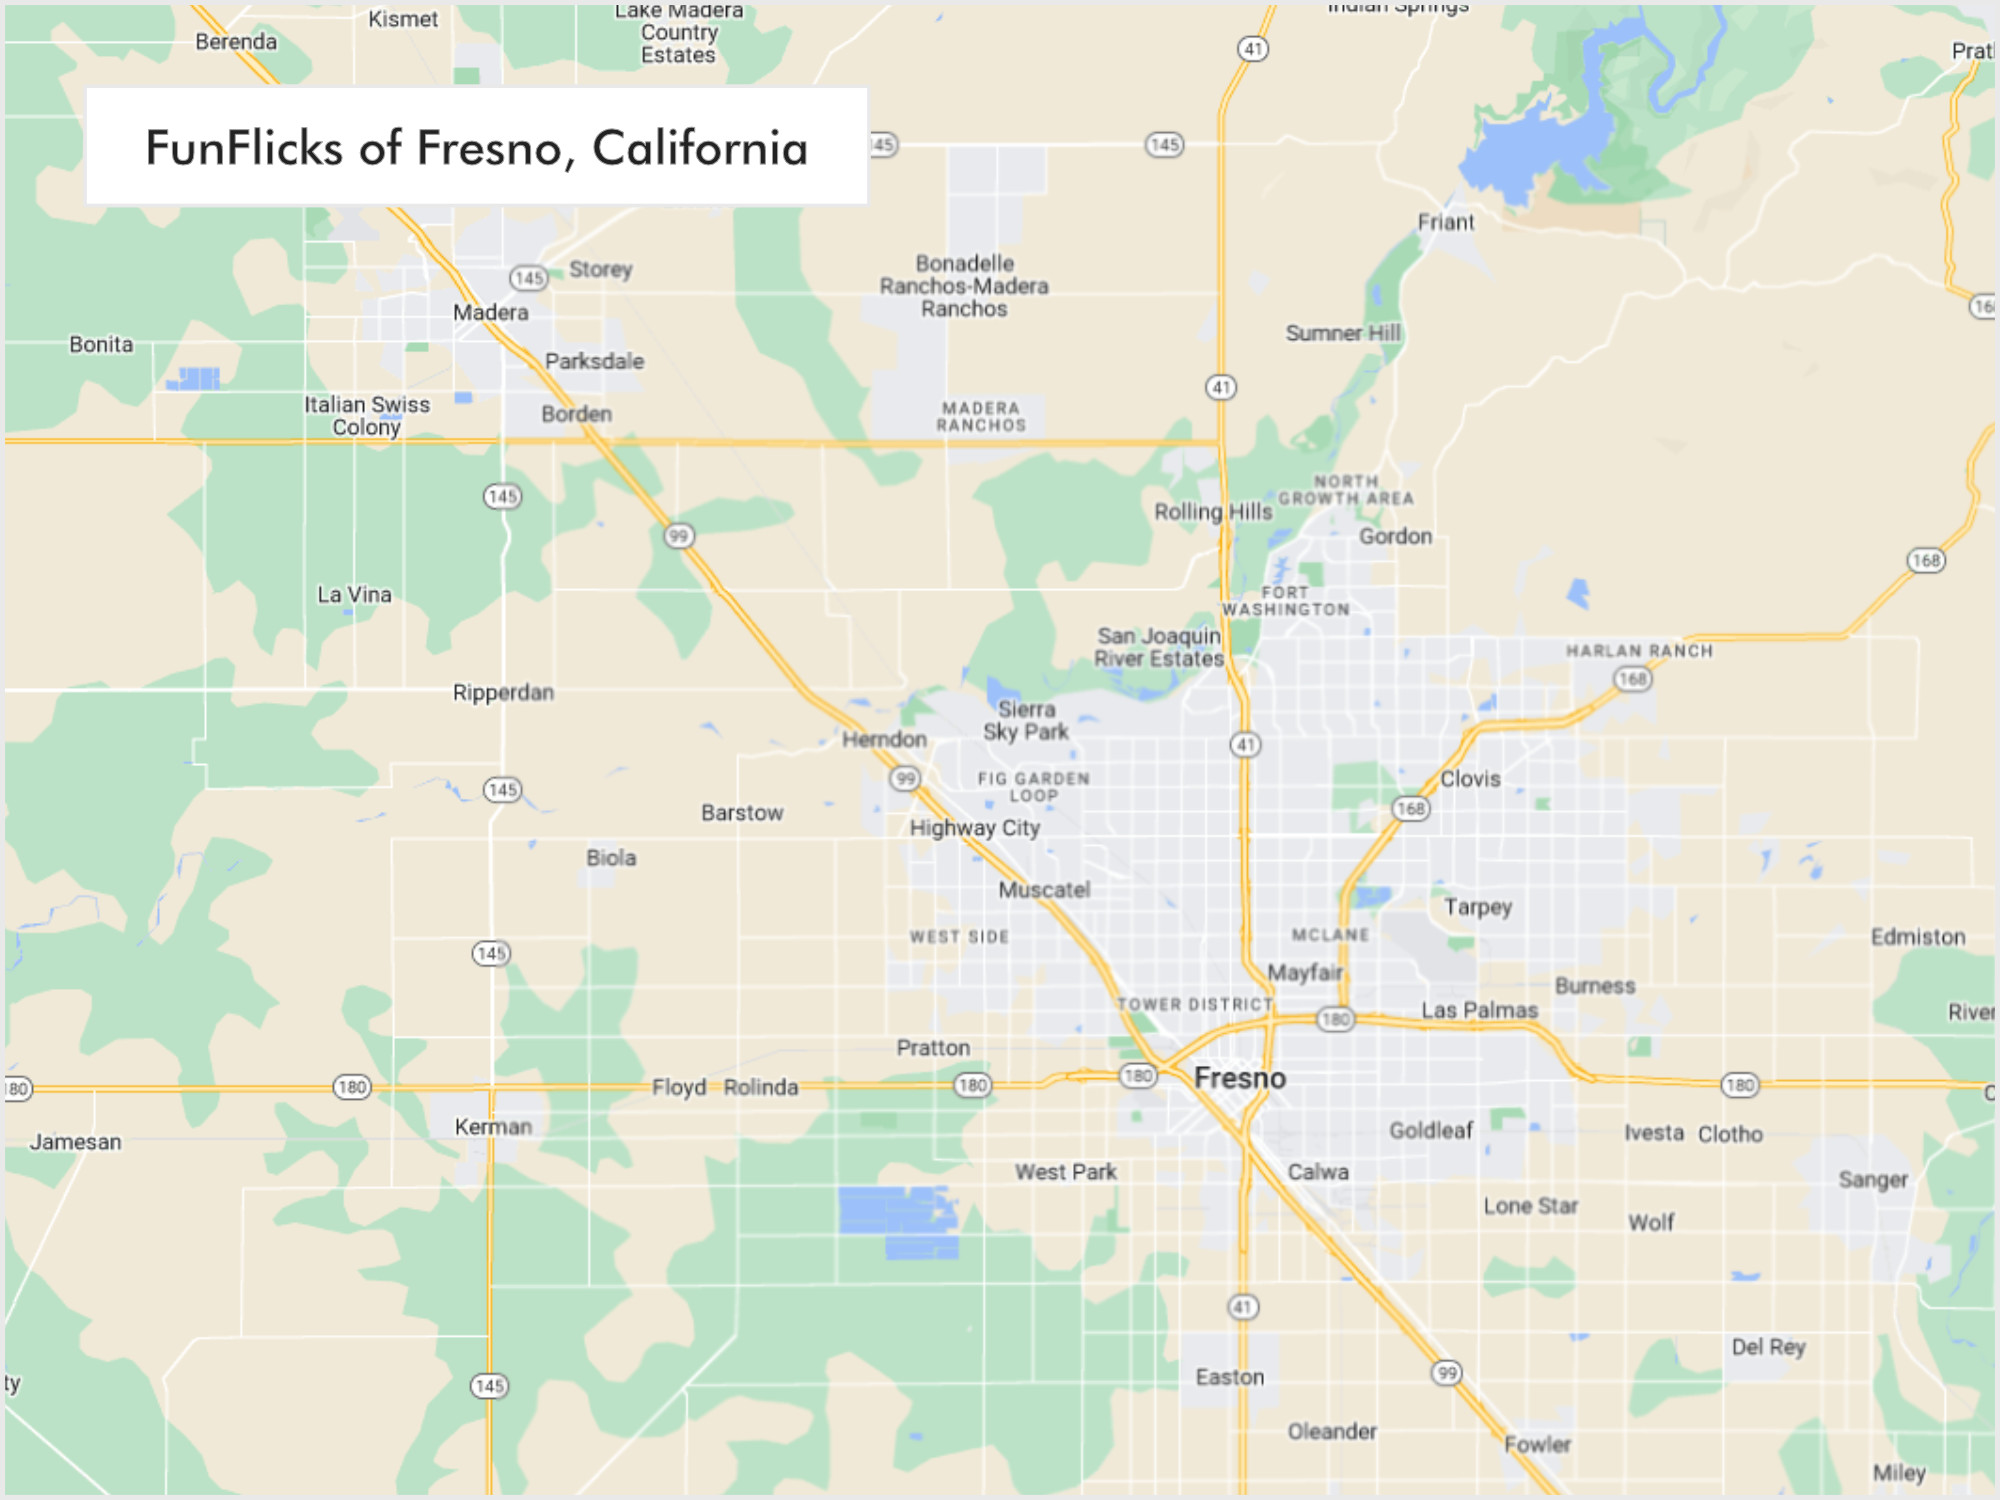 FunFlicks® Fresno territory map